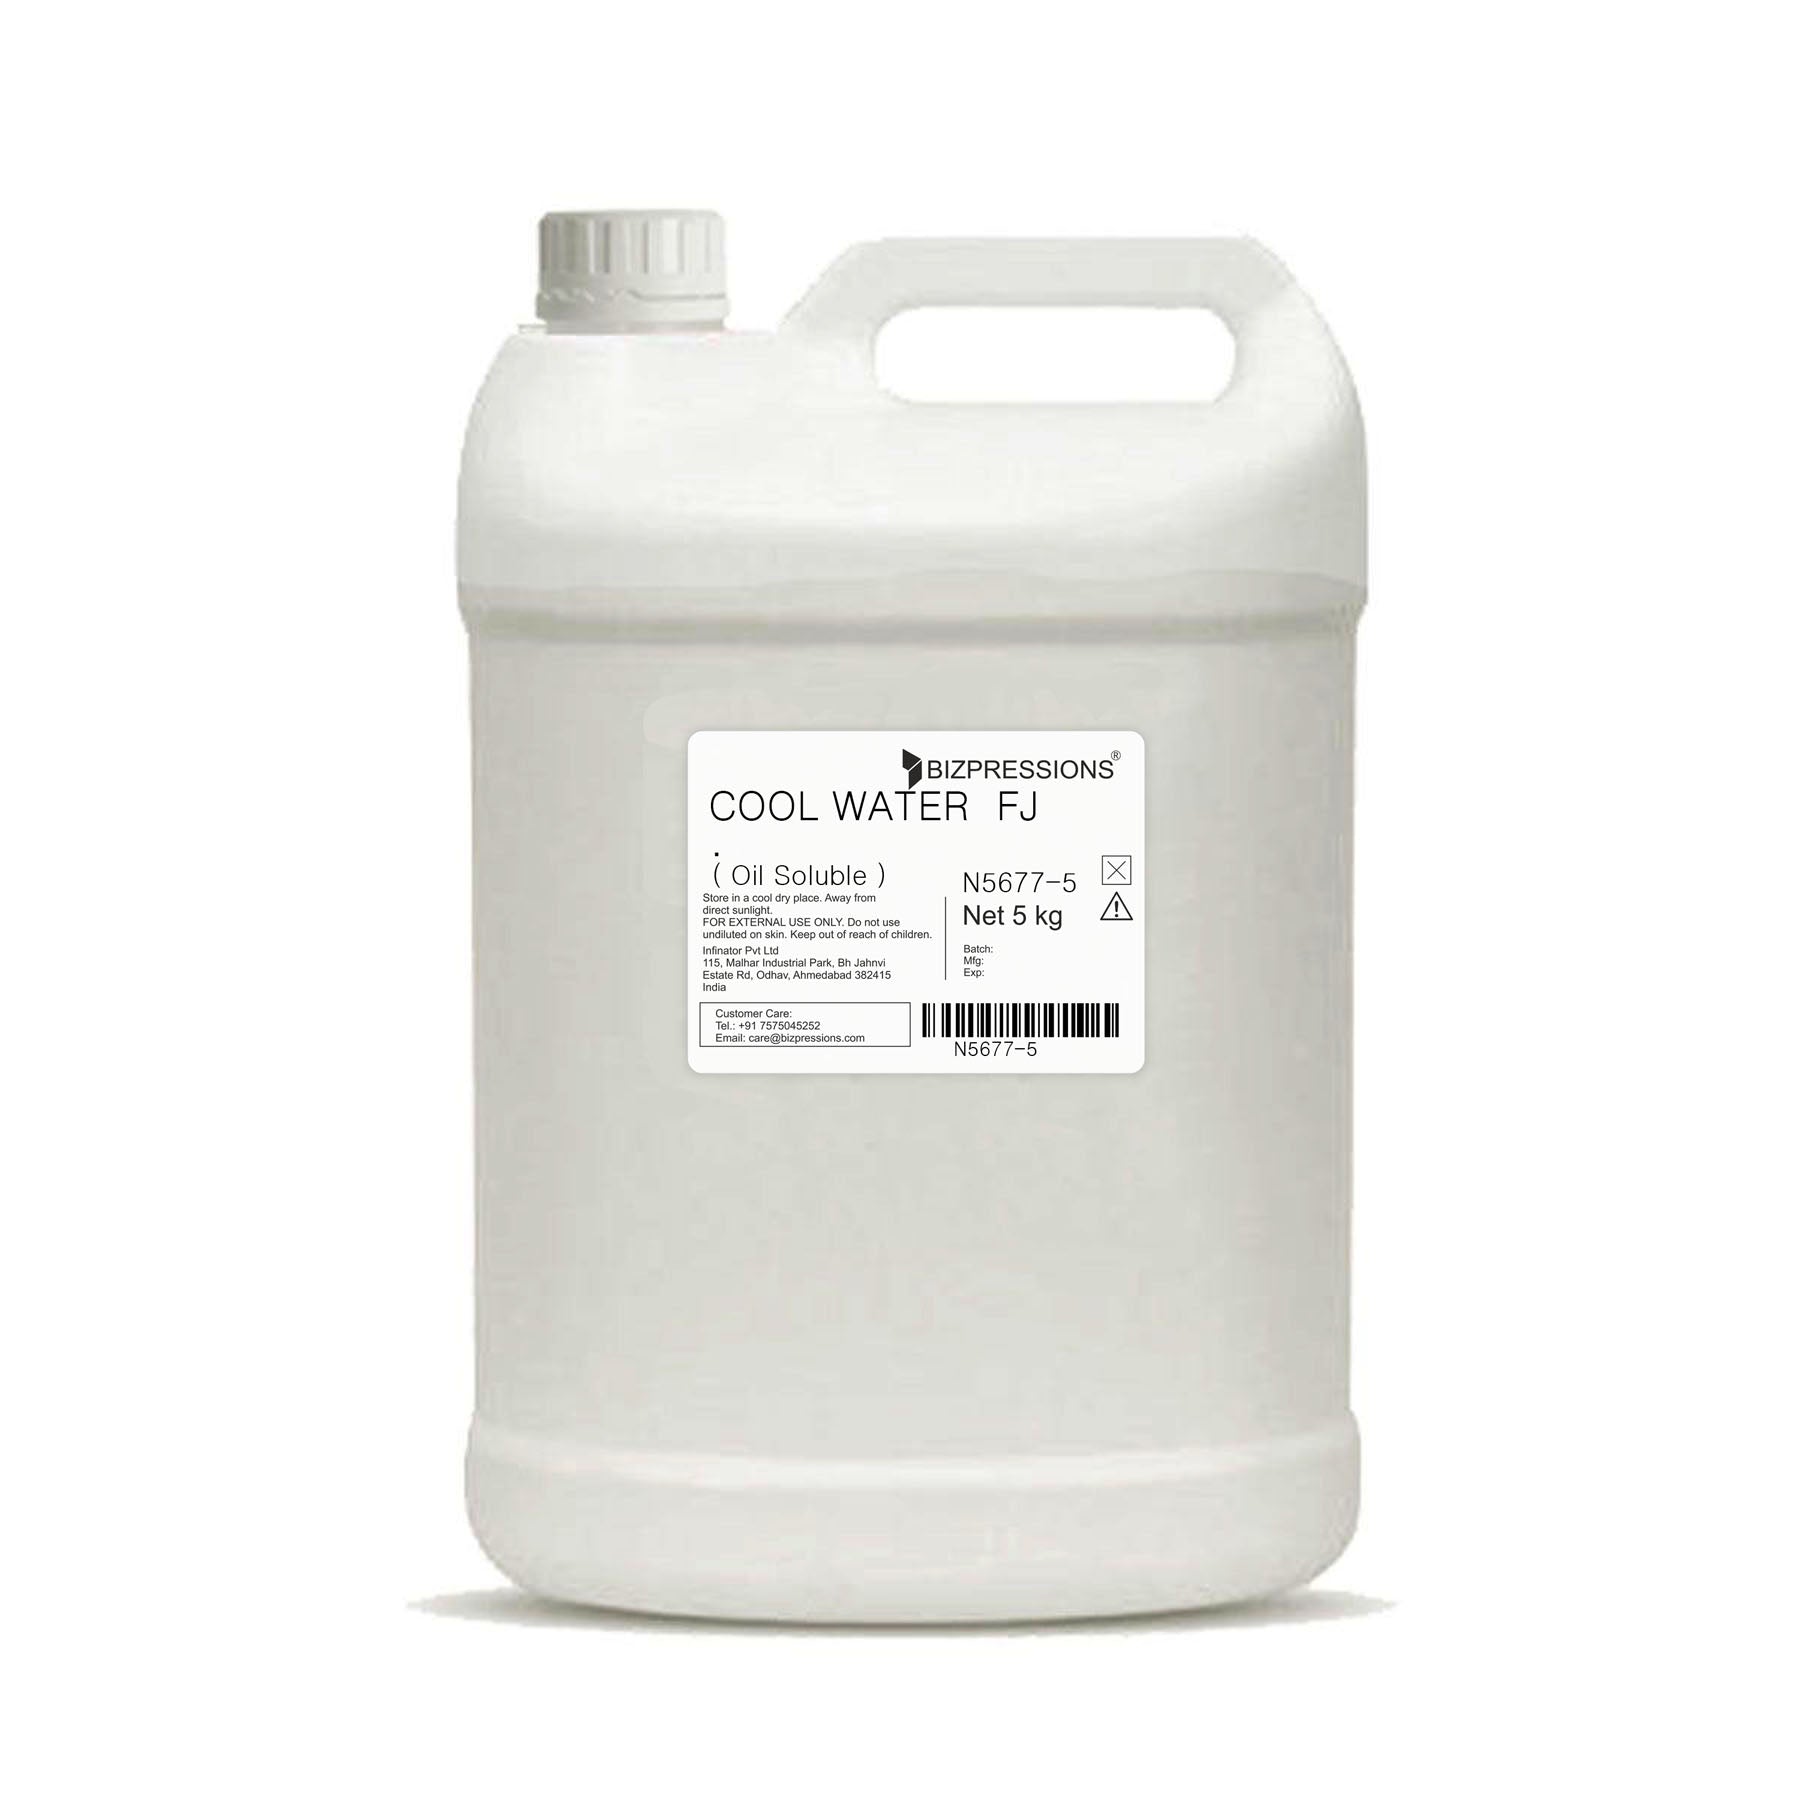 COOL WATER FJ - Fragrance ( Oil Soluble ) - 5 kg